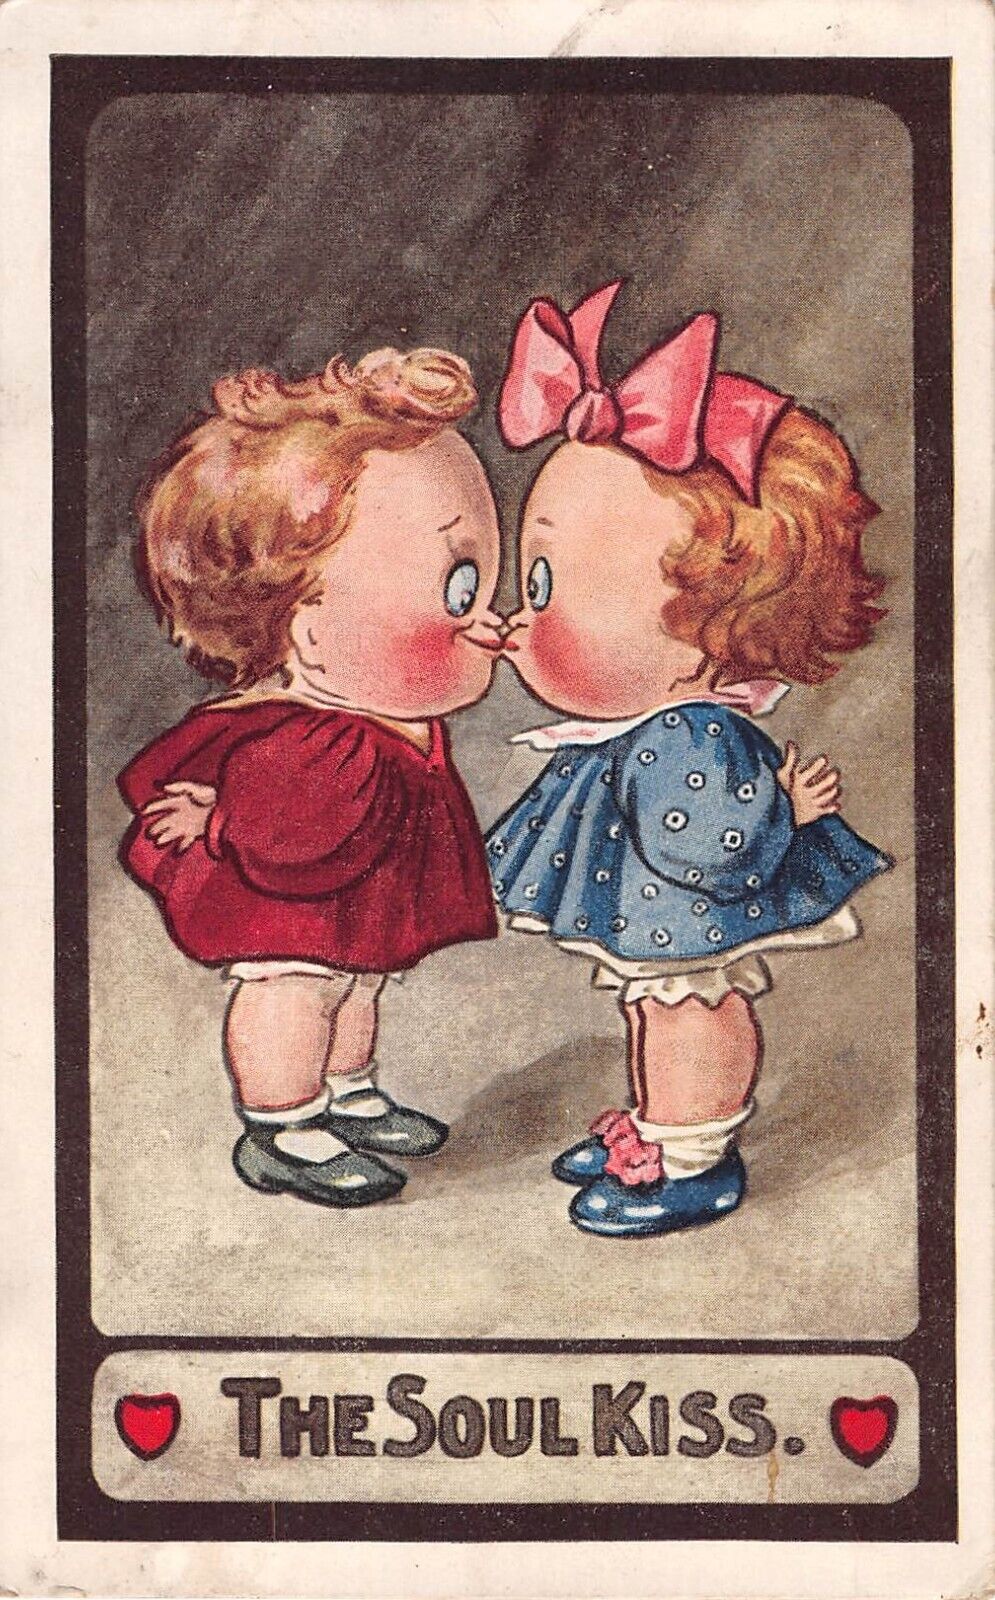 Cute Chubby Little Sweethearts Kissing-The Soul Kiss-Kute Kiddies Series No. 636